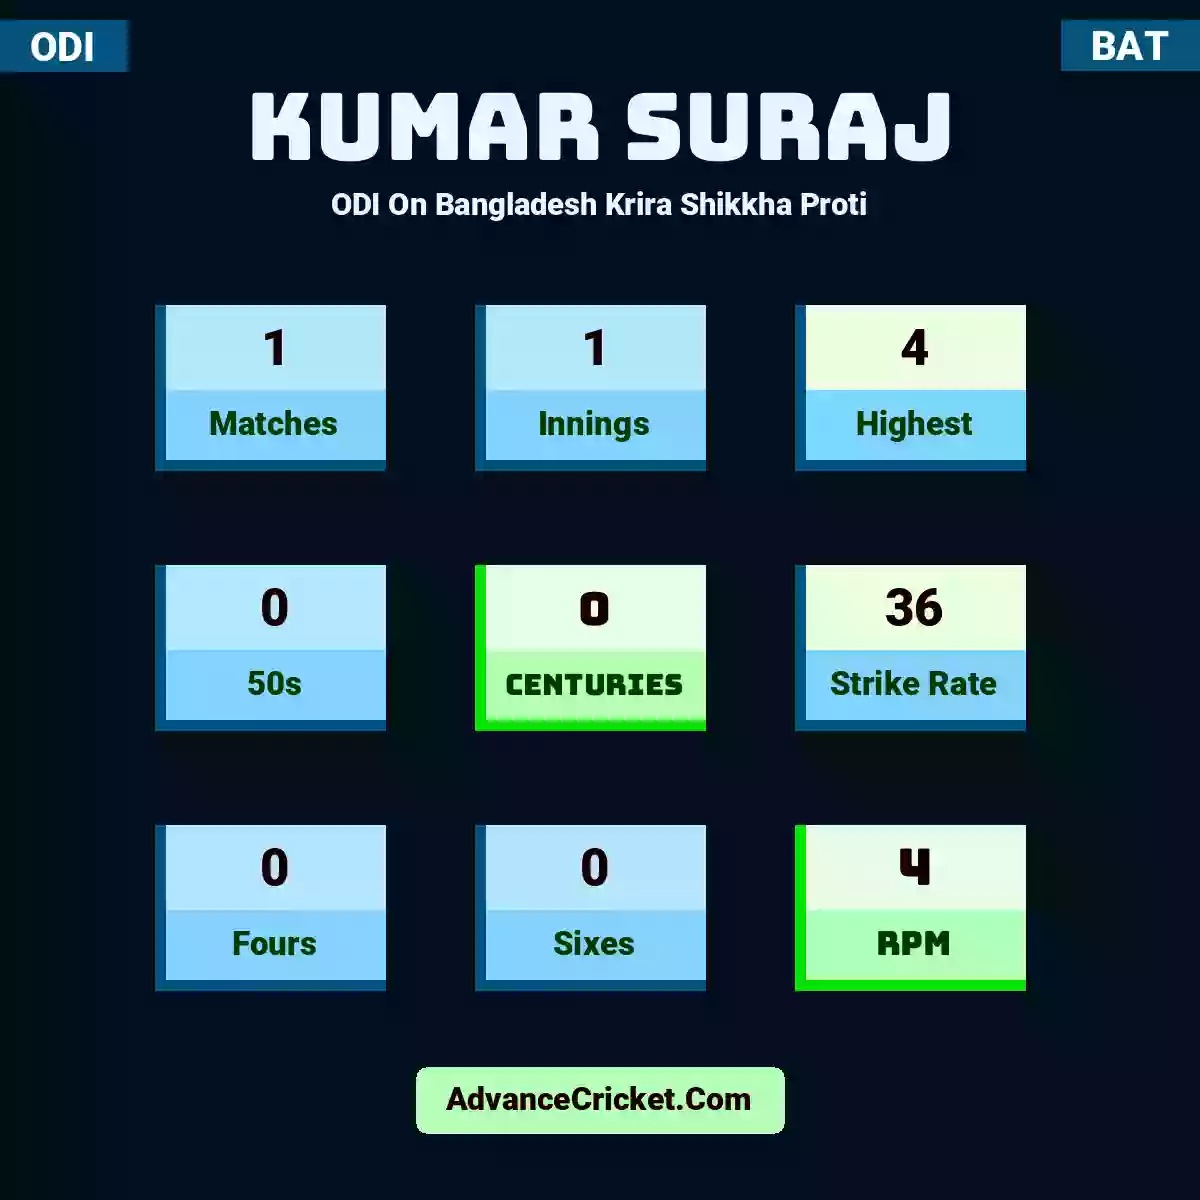 Kumar Suraj ODI  On Bangladesh Krira Shikkha Proti, Kumar Suraj played 1 matches, scored 4 runs as highest, 0 half-centuries, and 0 centuries, with a strike rate of 36. K.Suraj hit 0 fours and 0 sixes, with an RPM of 4.